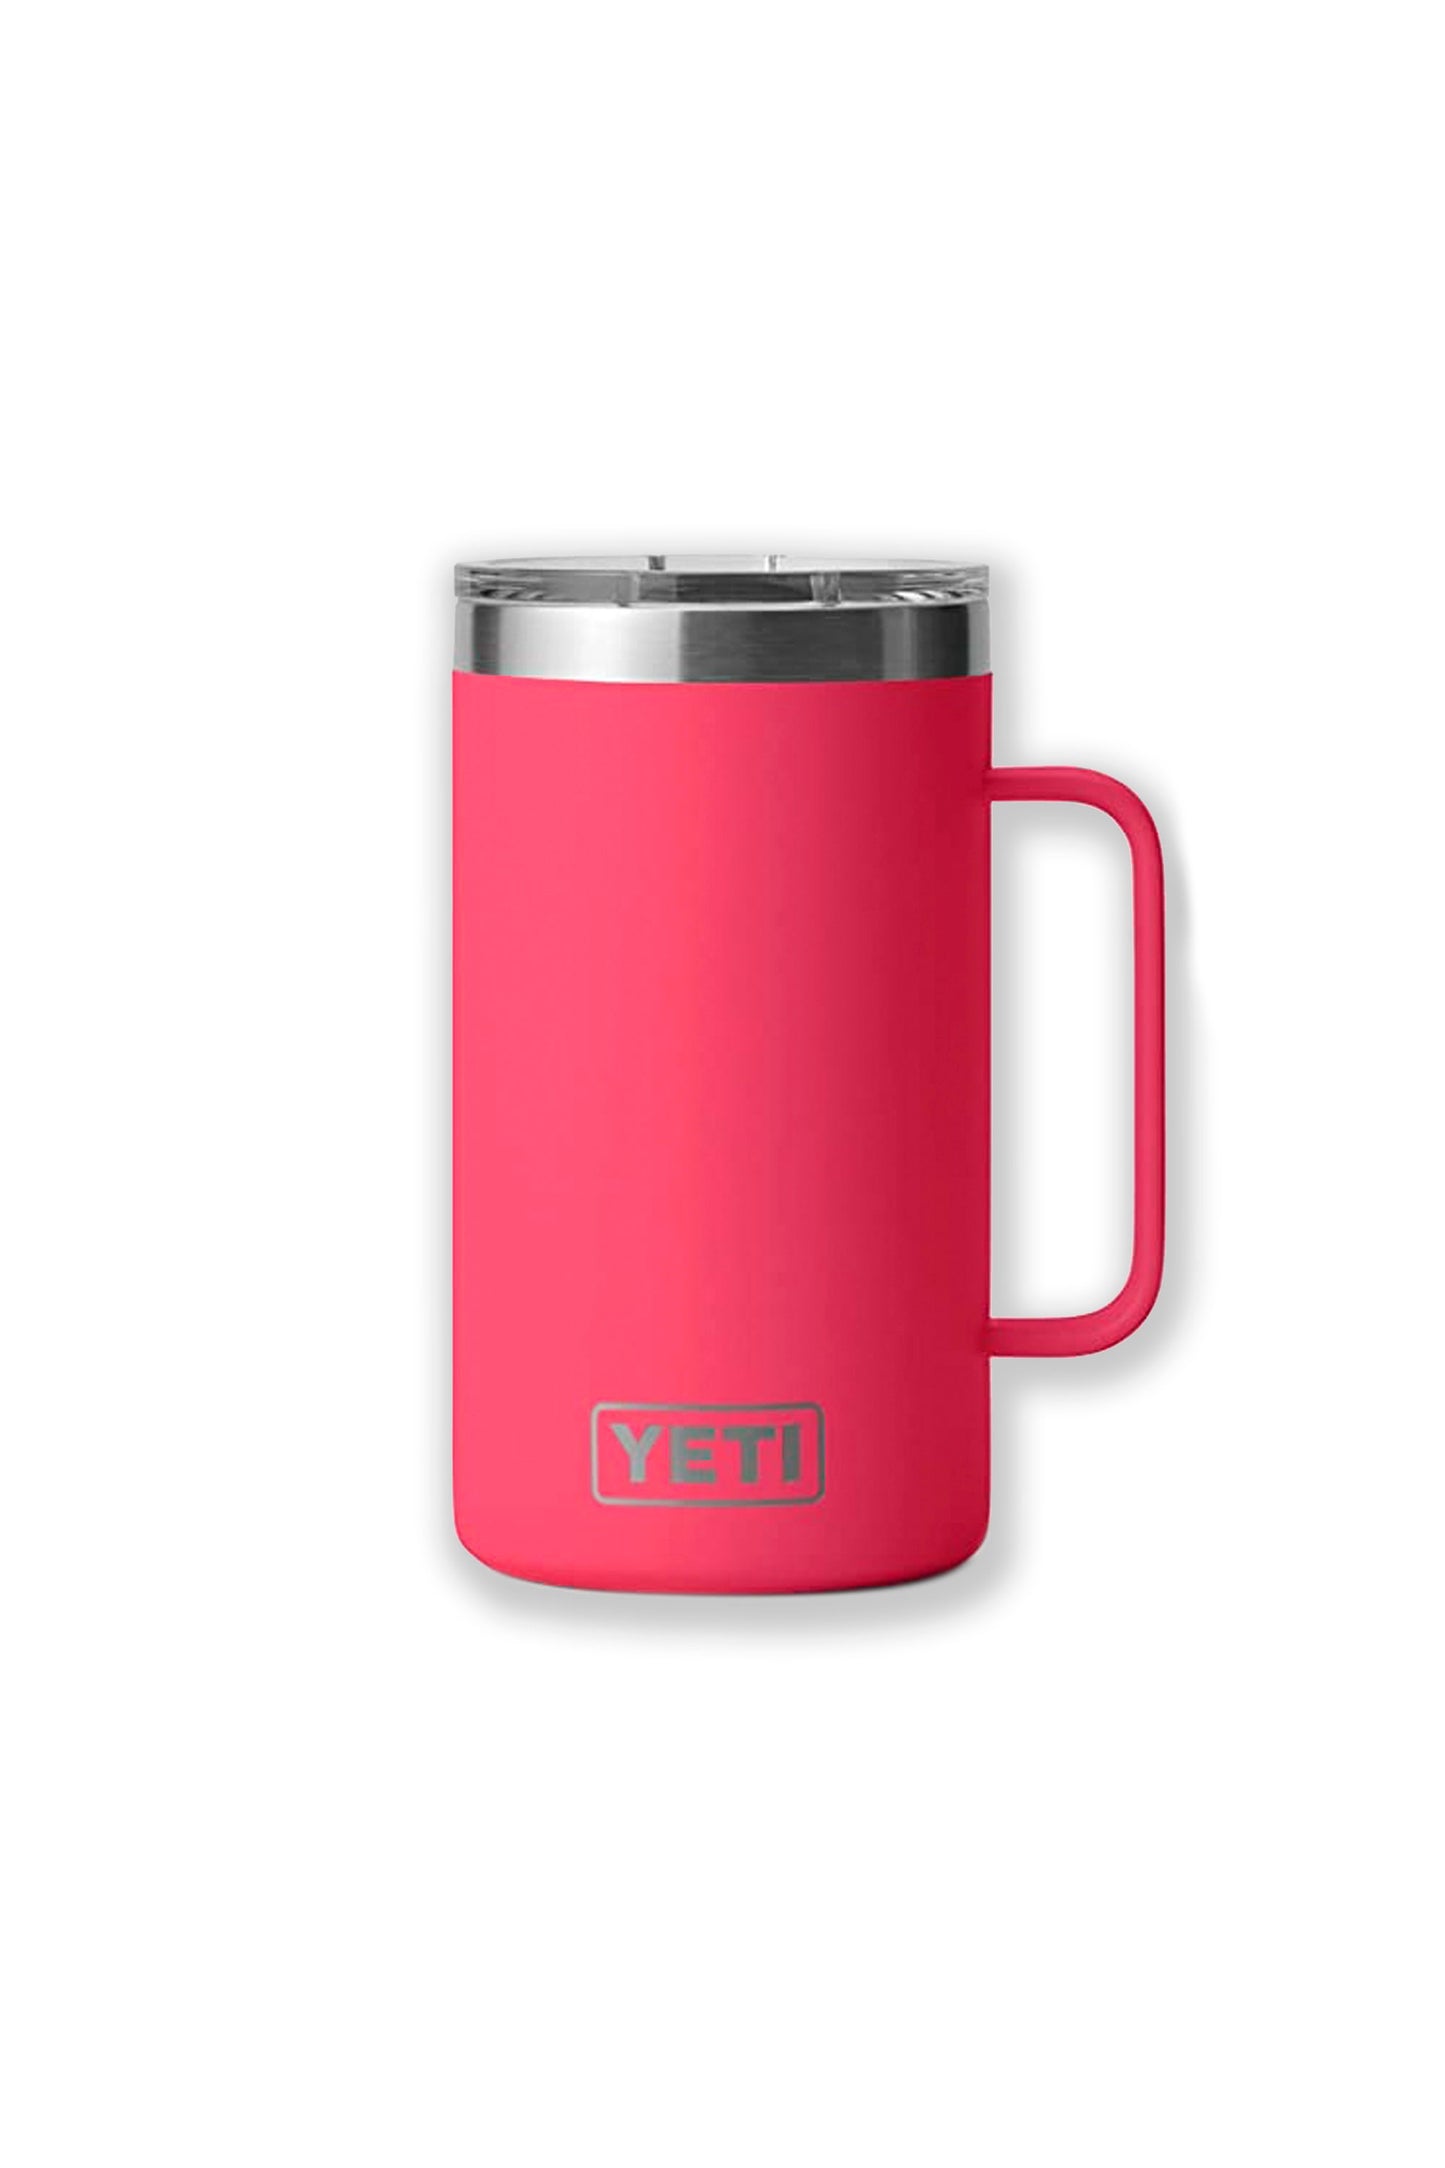 https://cdn.shopify.com/s/files/1/0424/0673/products/Pukas-Surf-Shop-Yeti-Drinkware-Rambler-24-oz-mug-bimini-pink-2-1_1445x.jpg?v=1676978975